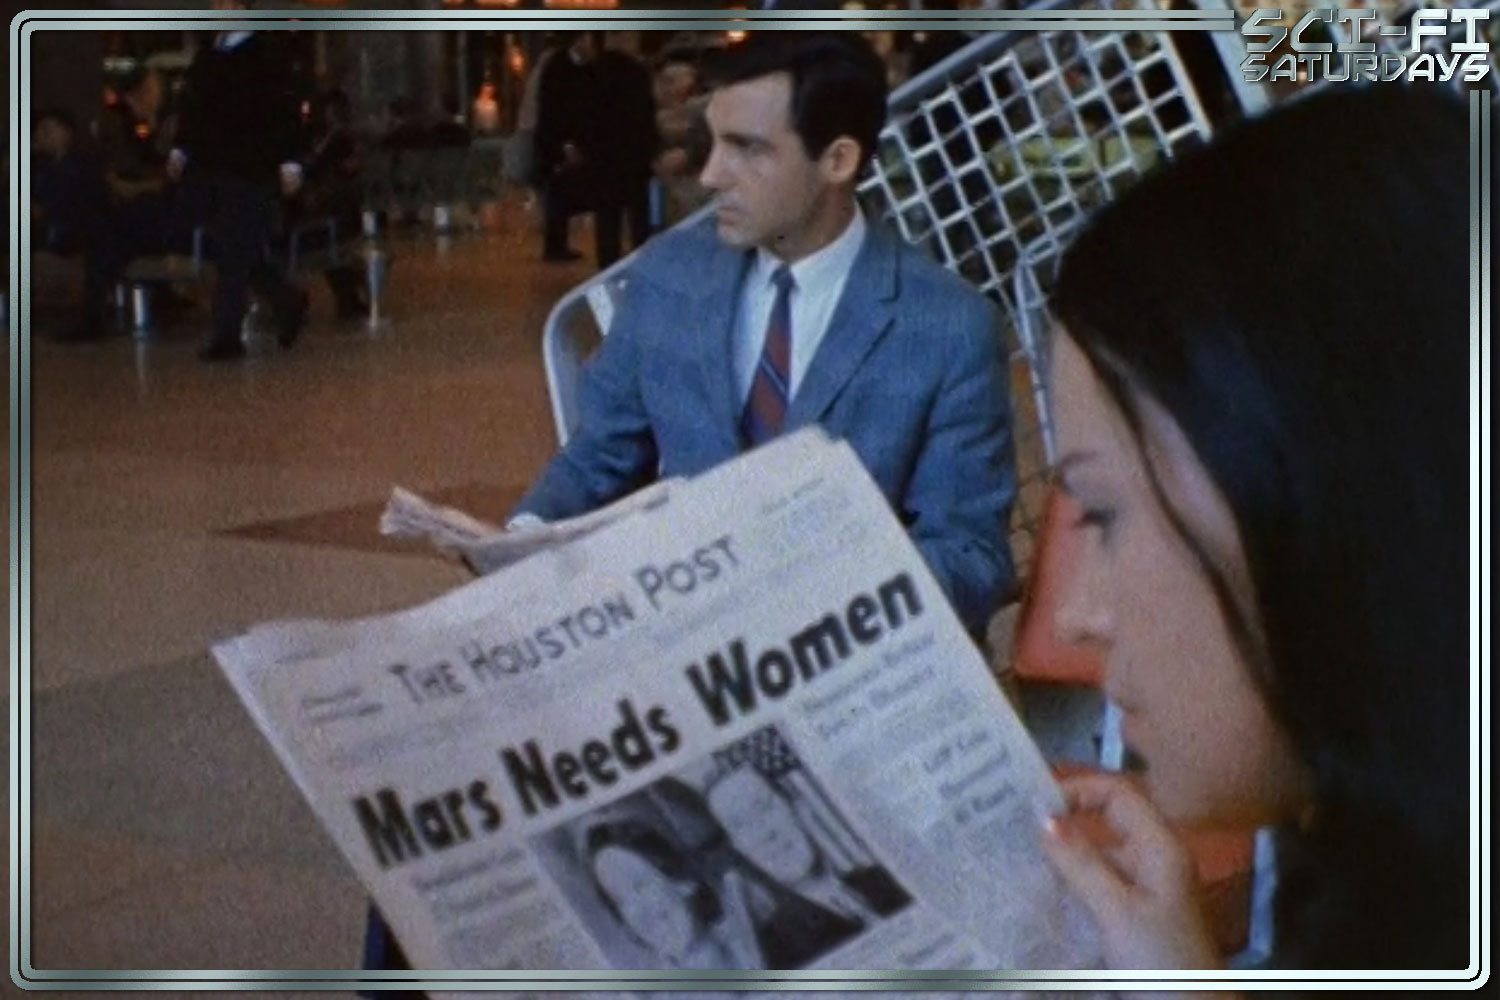 Mars Needs Women (1968): Where to Watch and Stream Online